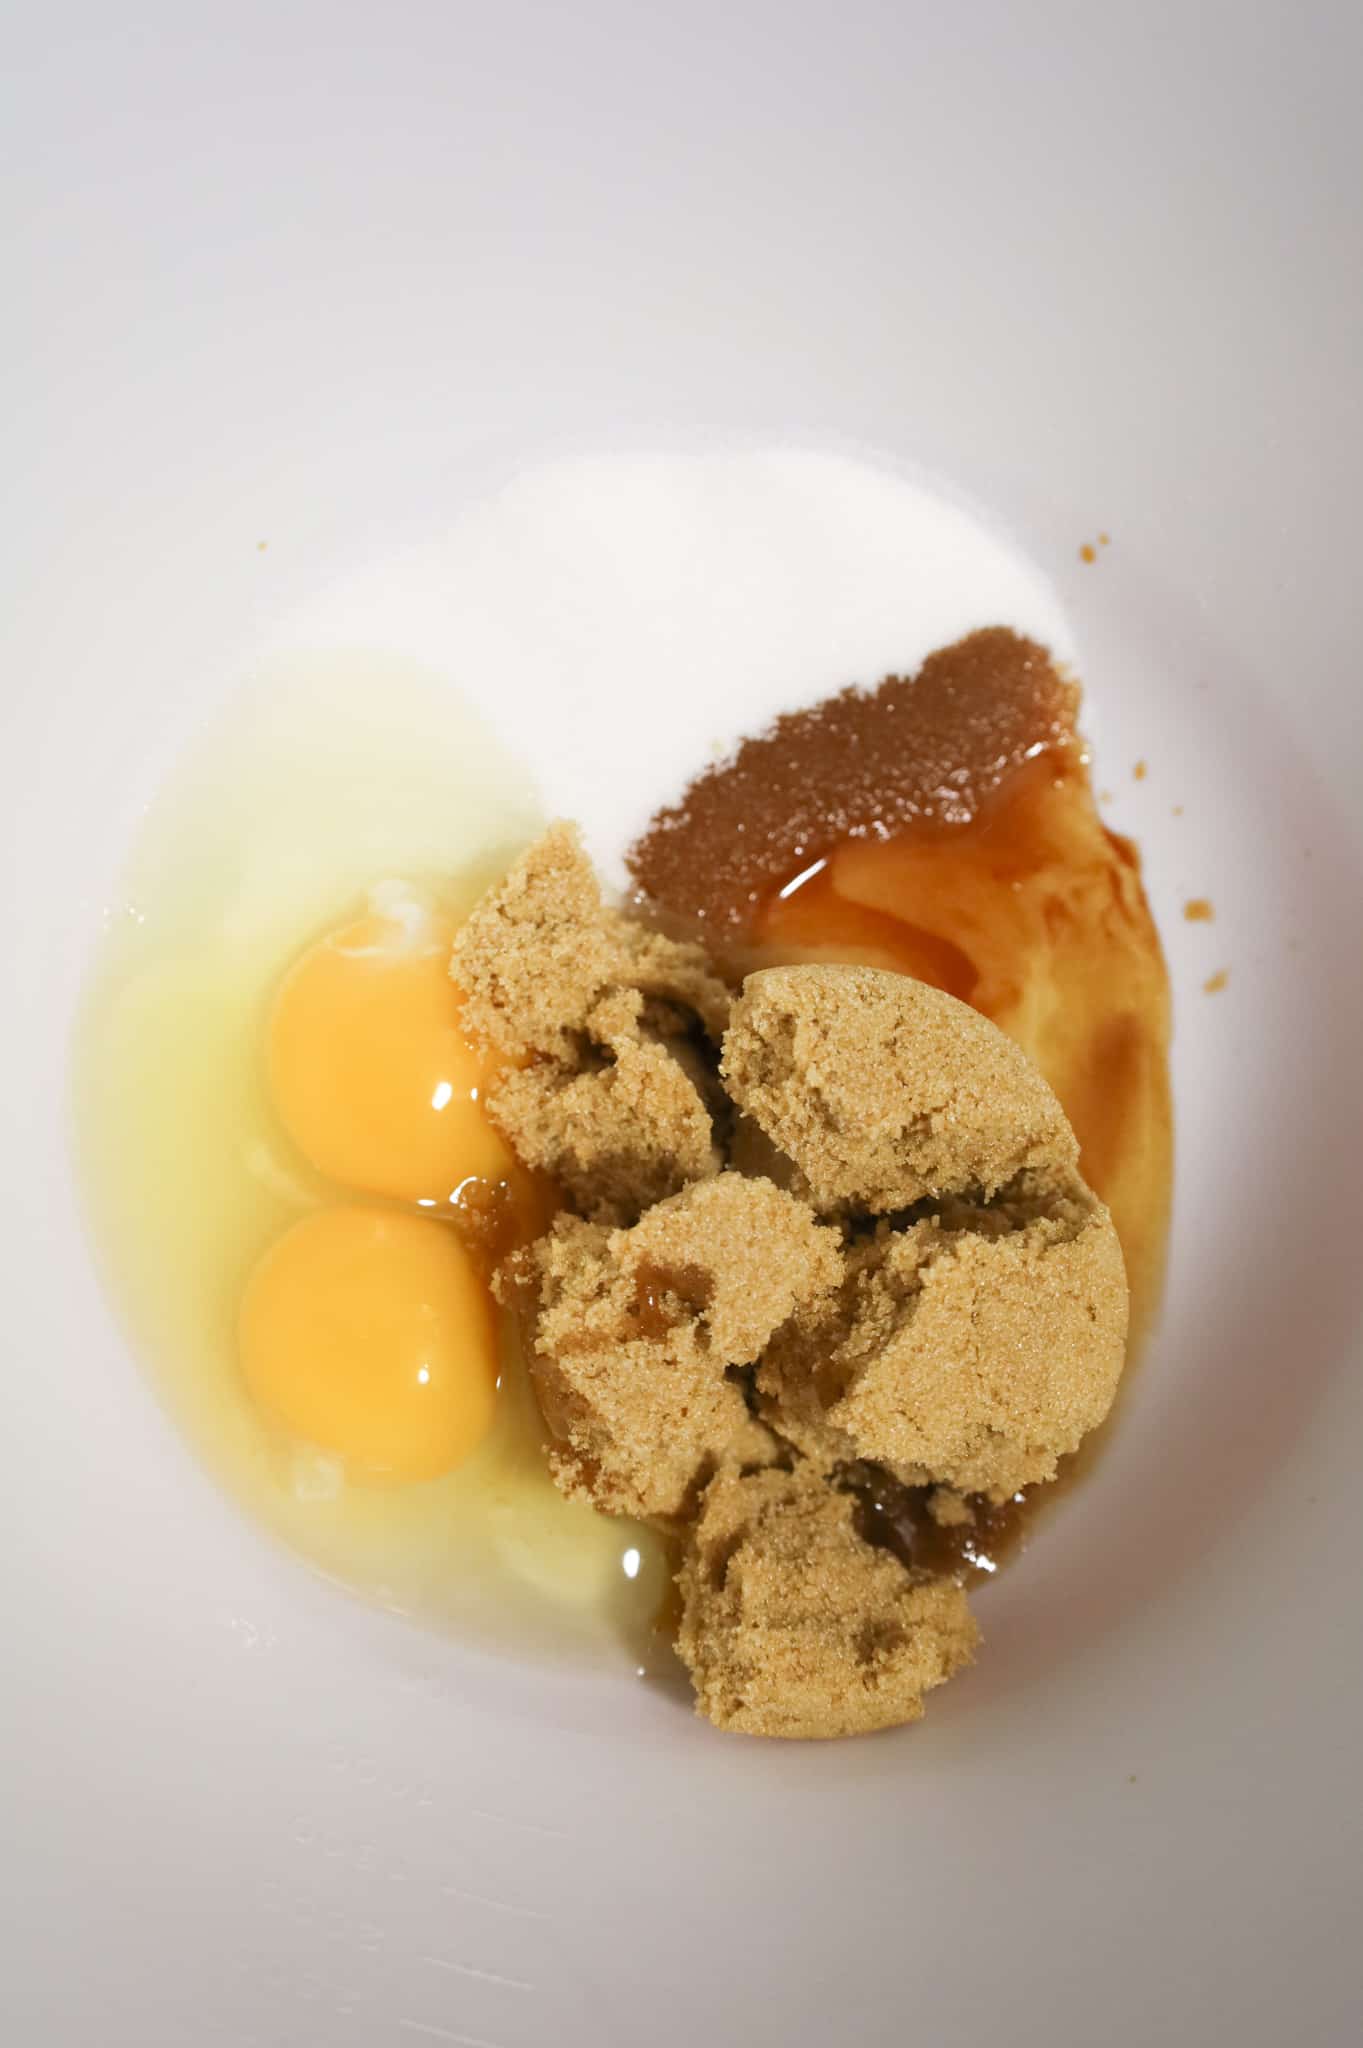 brown sugar, granulated sugar, eggs and vanilla extract in a mixing bowl